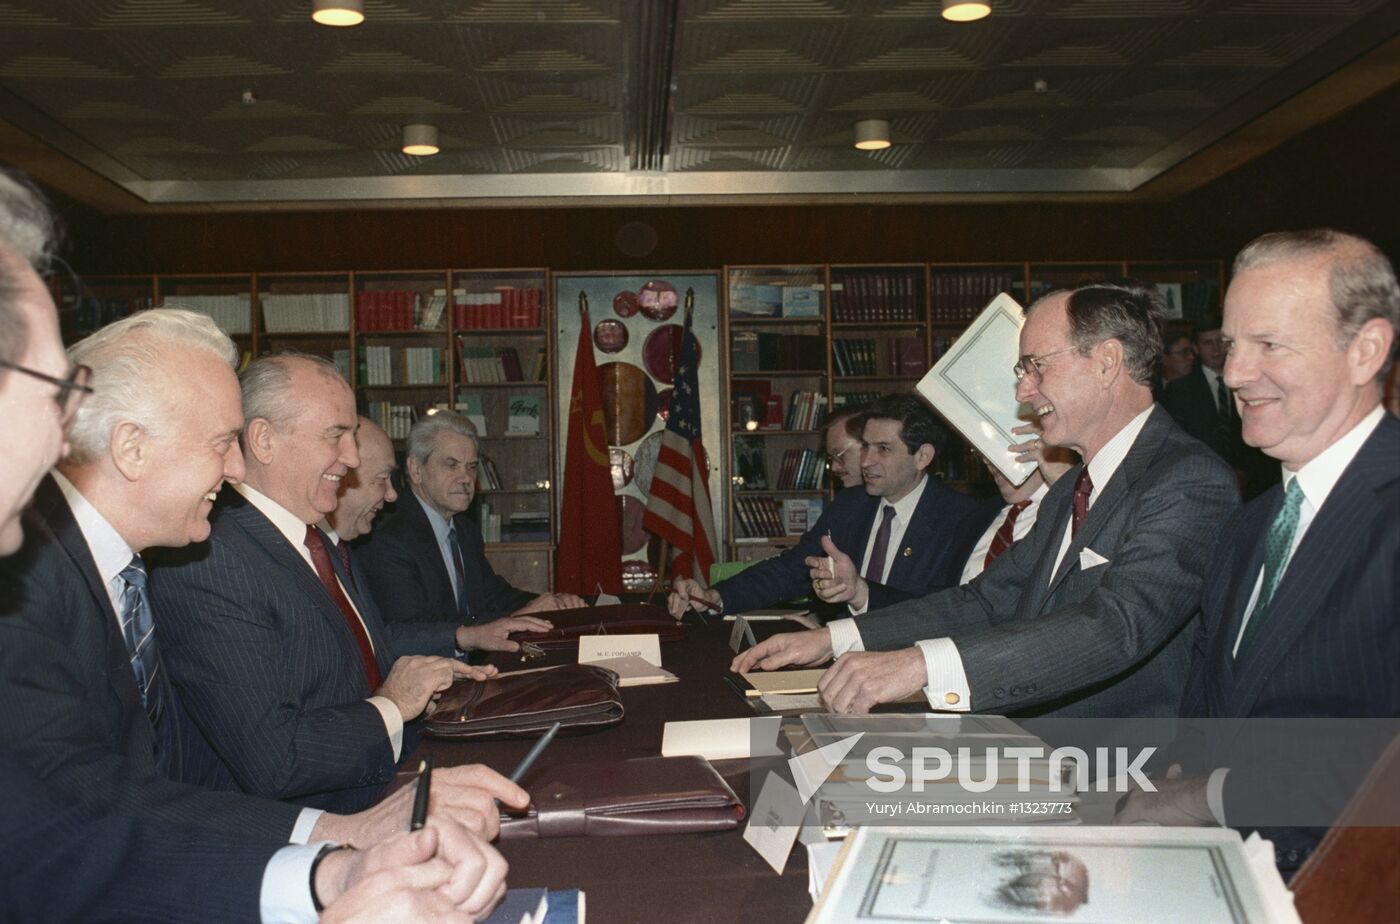 Eduard Shevardnadze, Mikhail Gorbachev, James Baker, George Bush